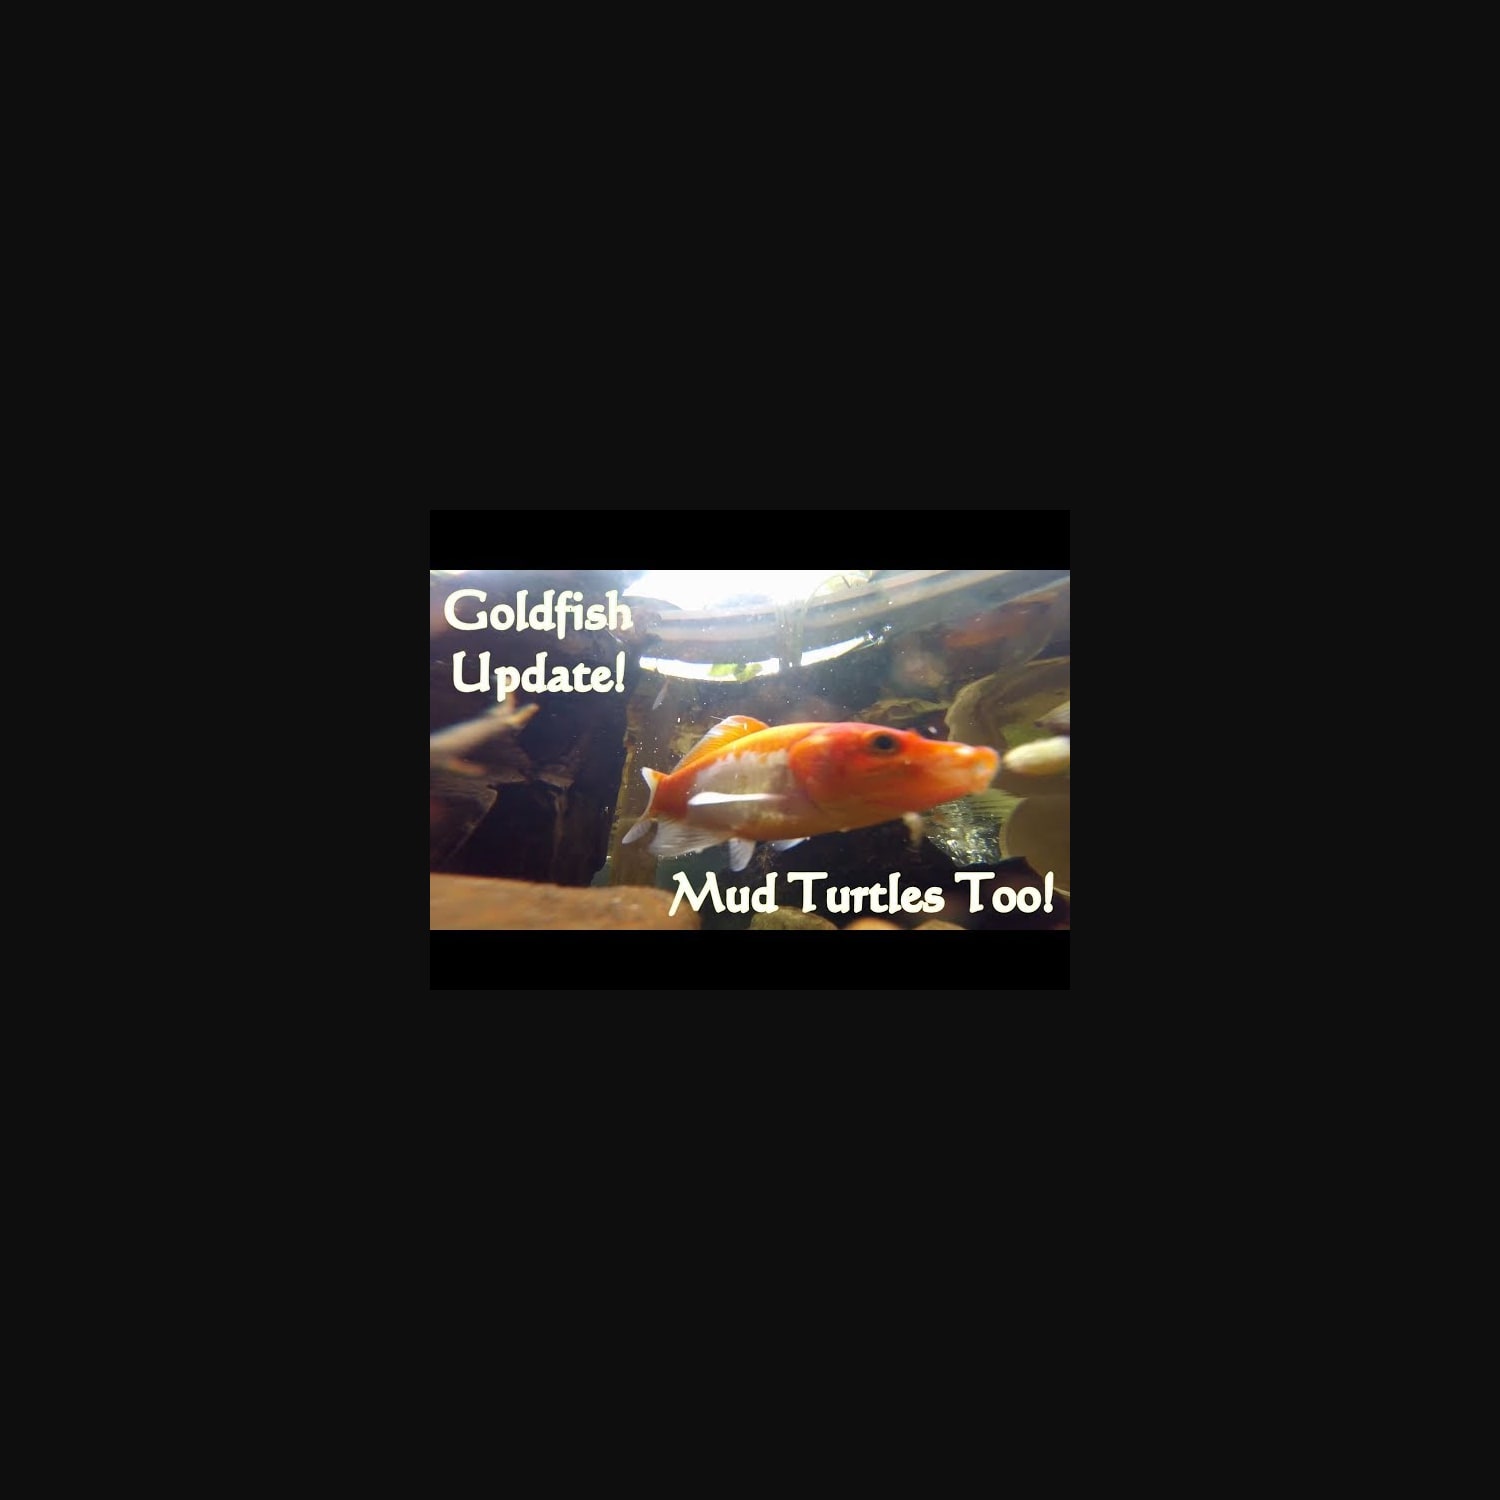 Goldfish and Mud Turtles